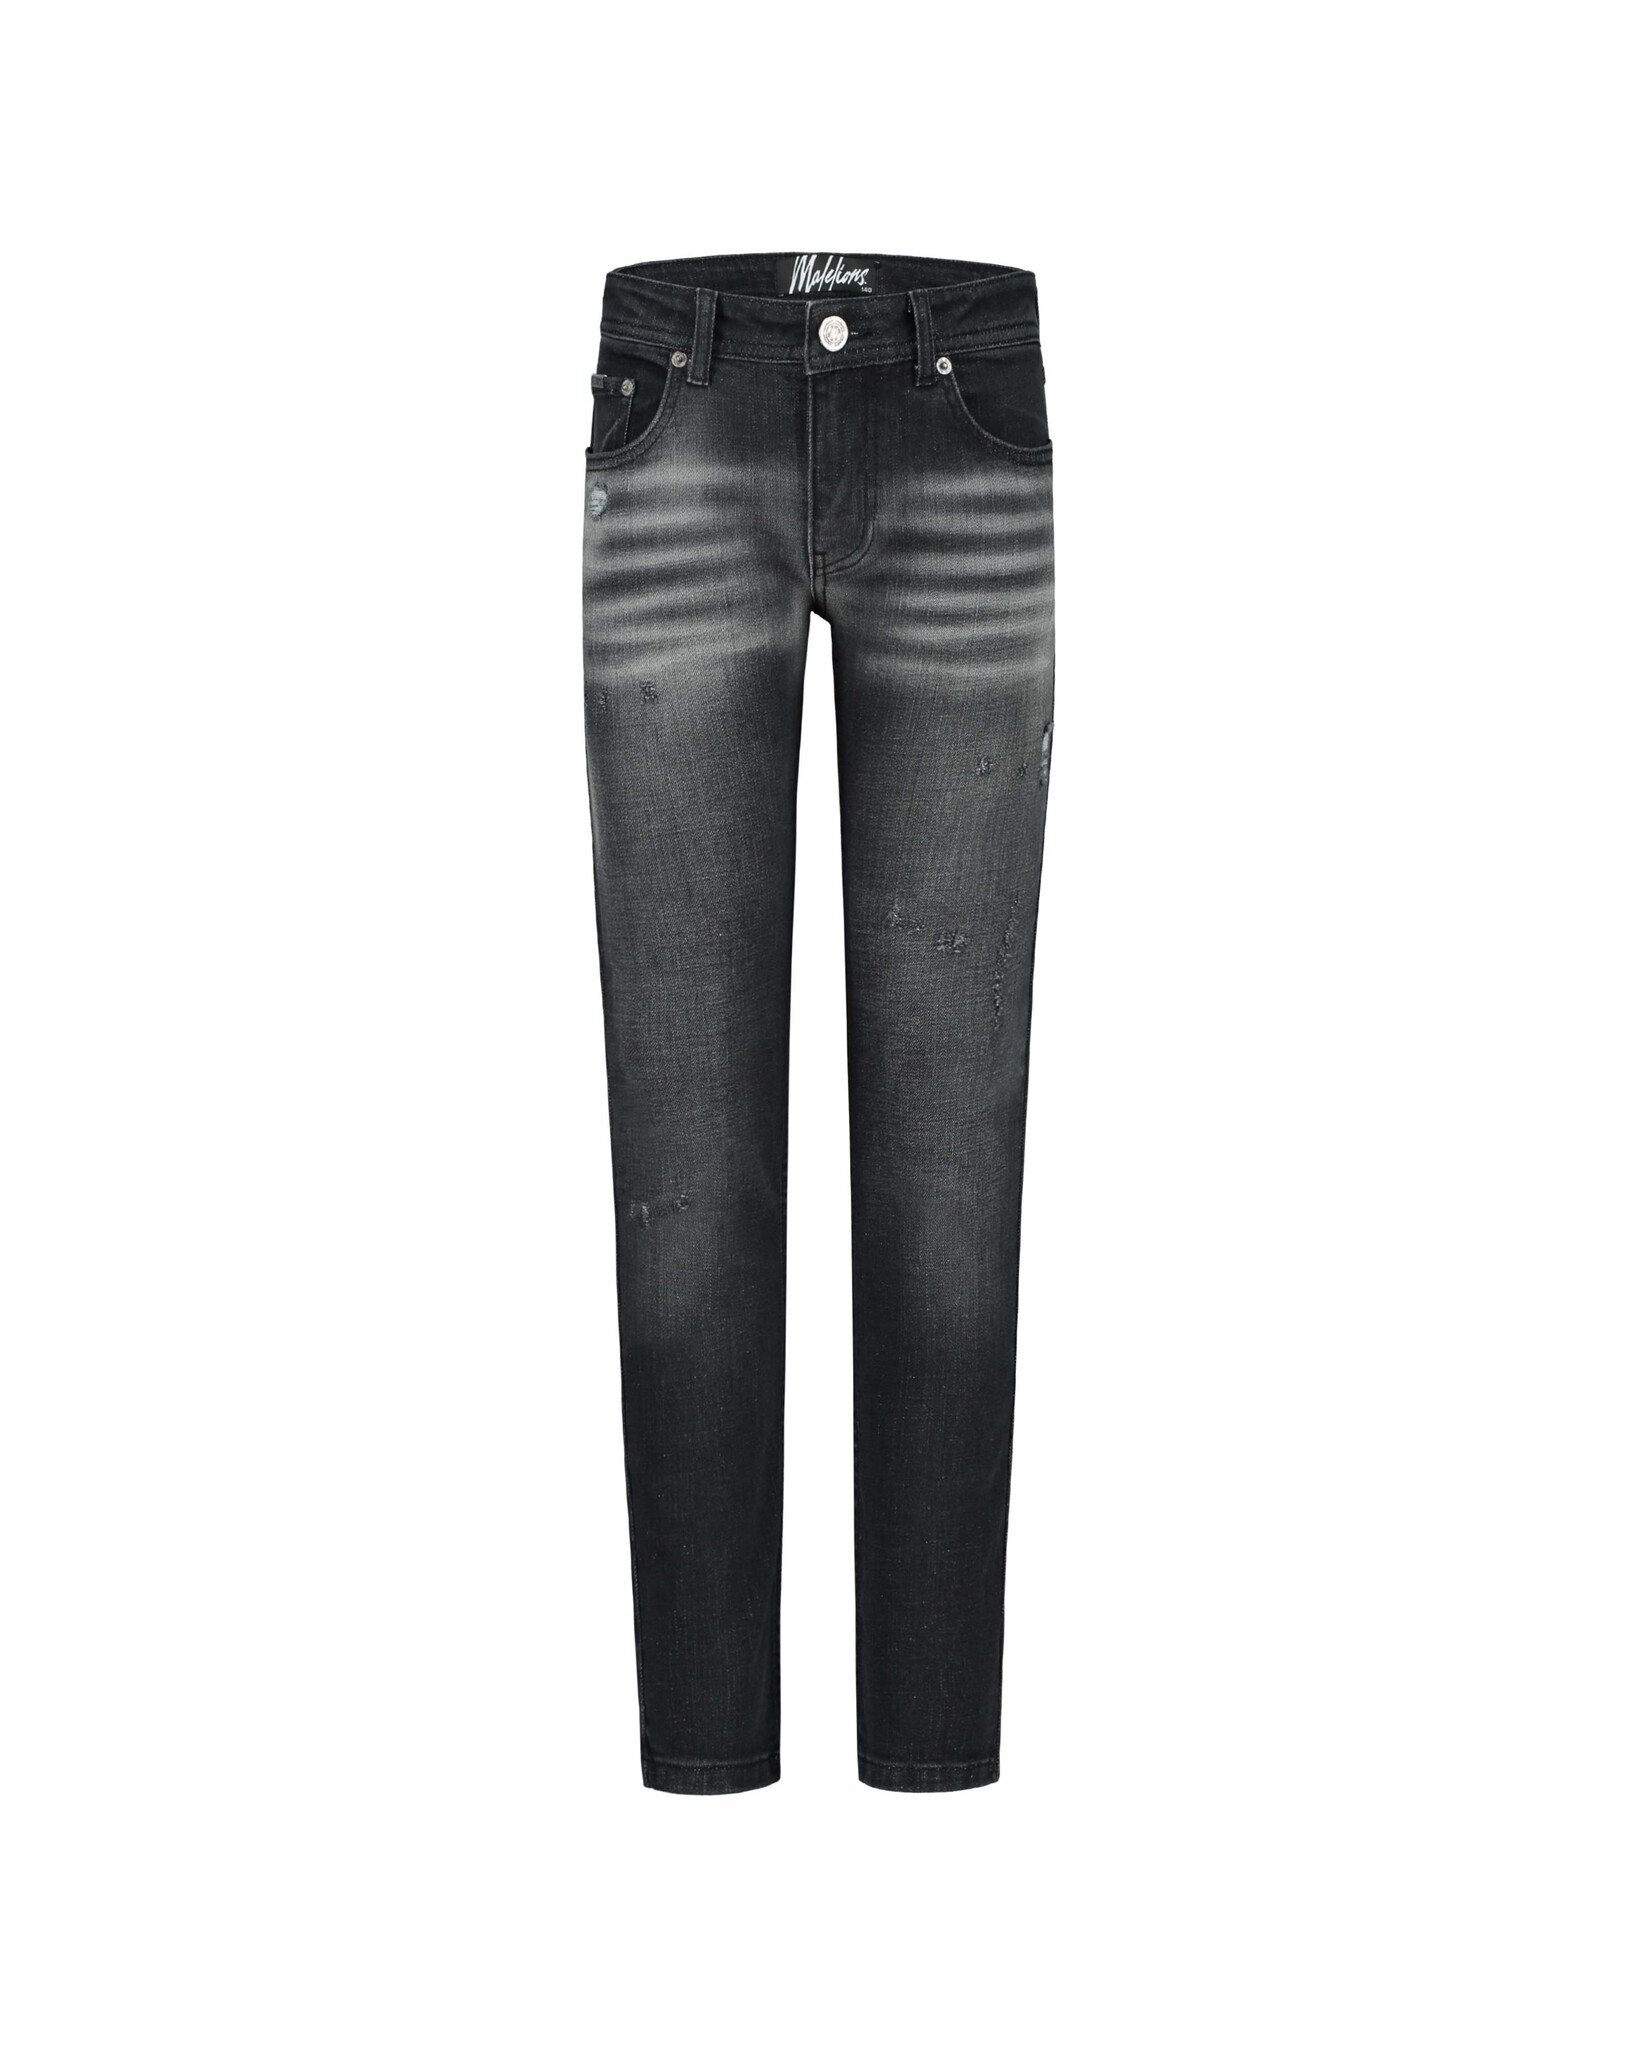 Malelions Junior Jax Jeans - Black product